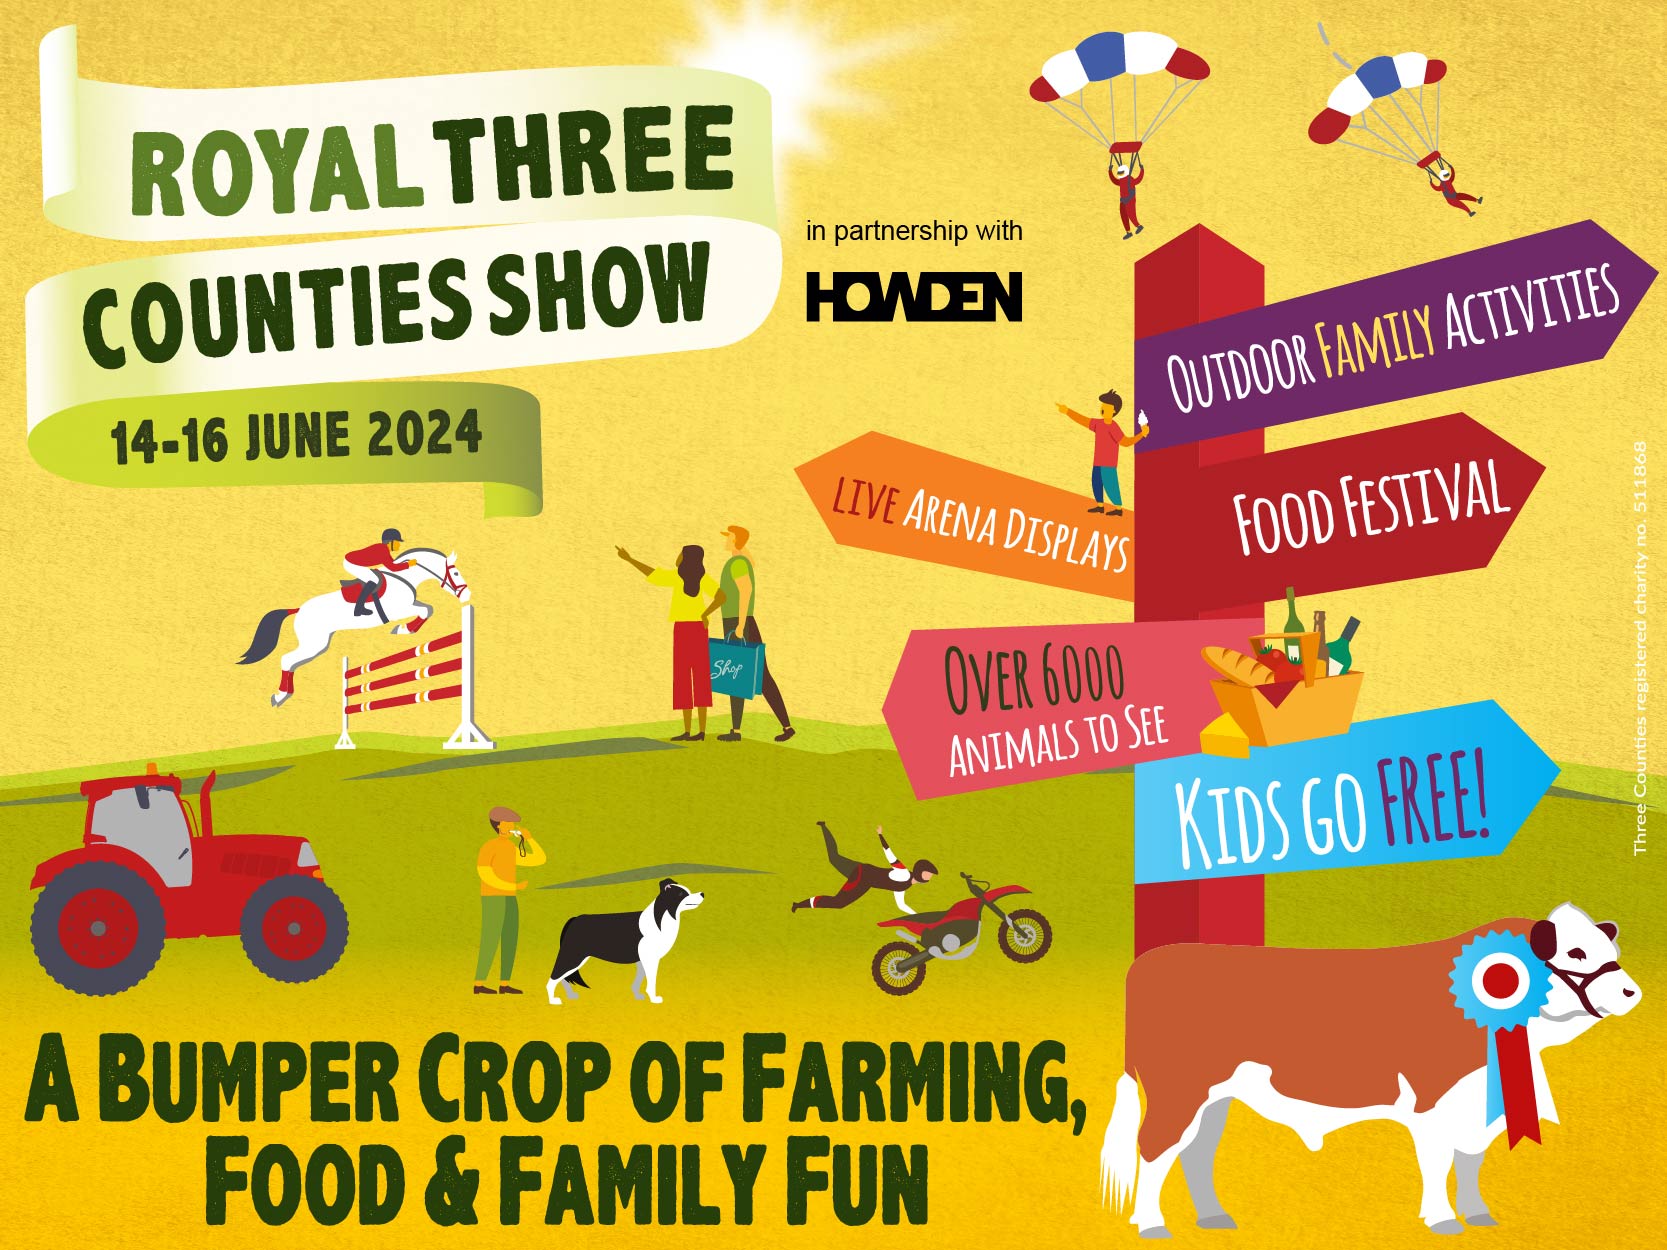 Royal Three Counties Show